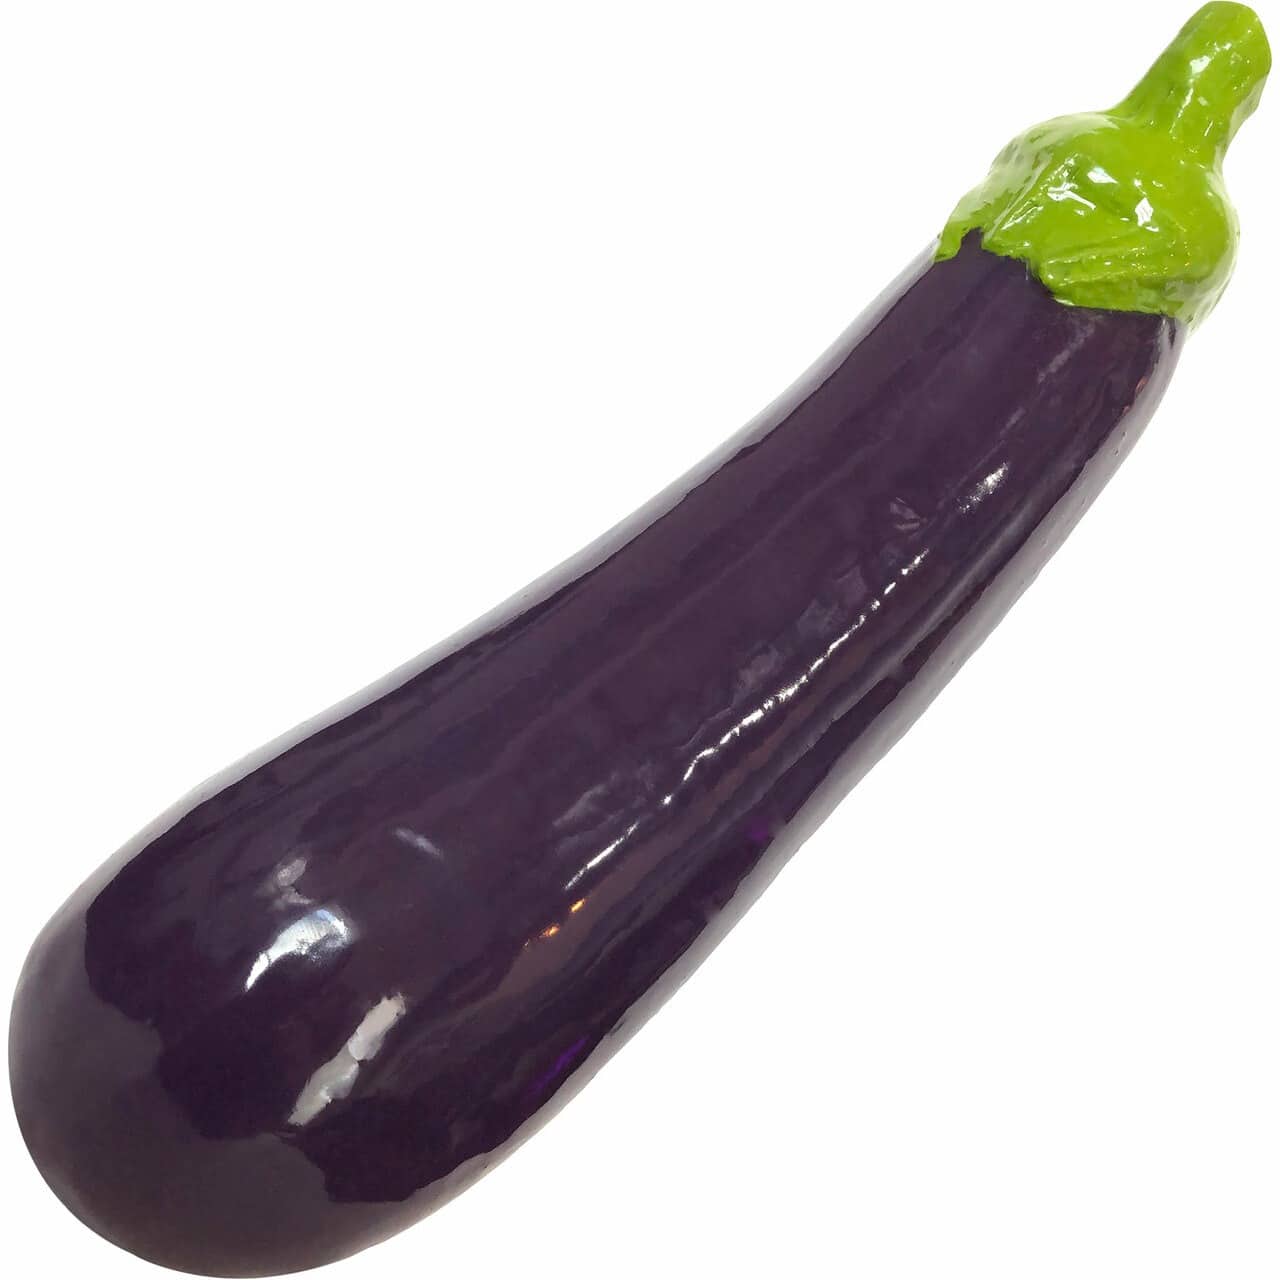 SelfDelve Eggplant Silicone Dildo 